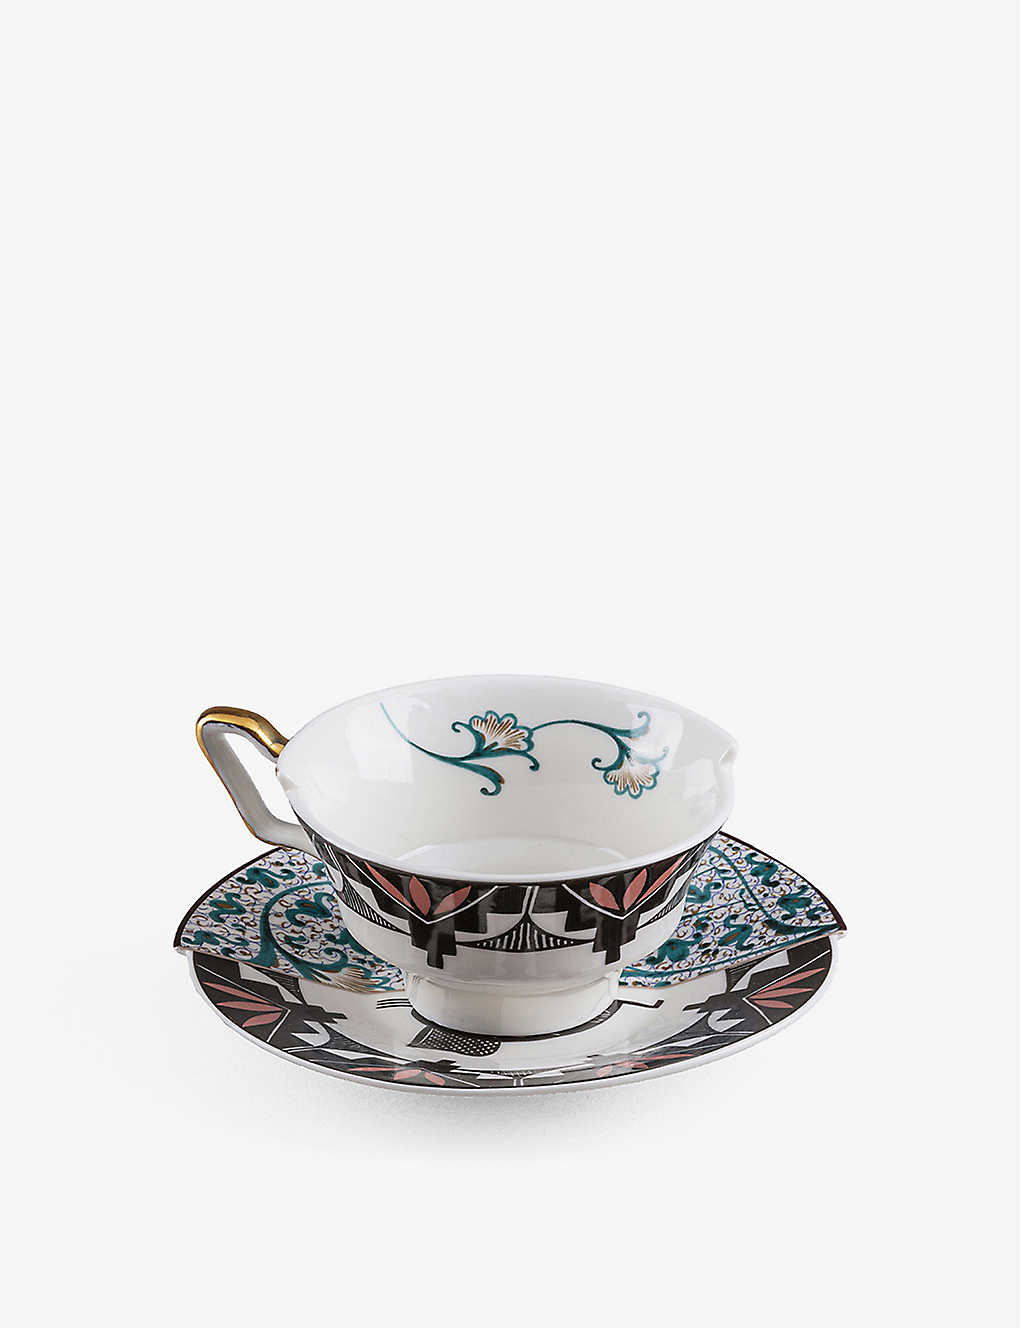 Seletti Hybrid Aspero Porcelain Teacup And Saucer